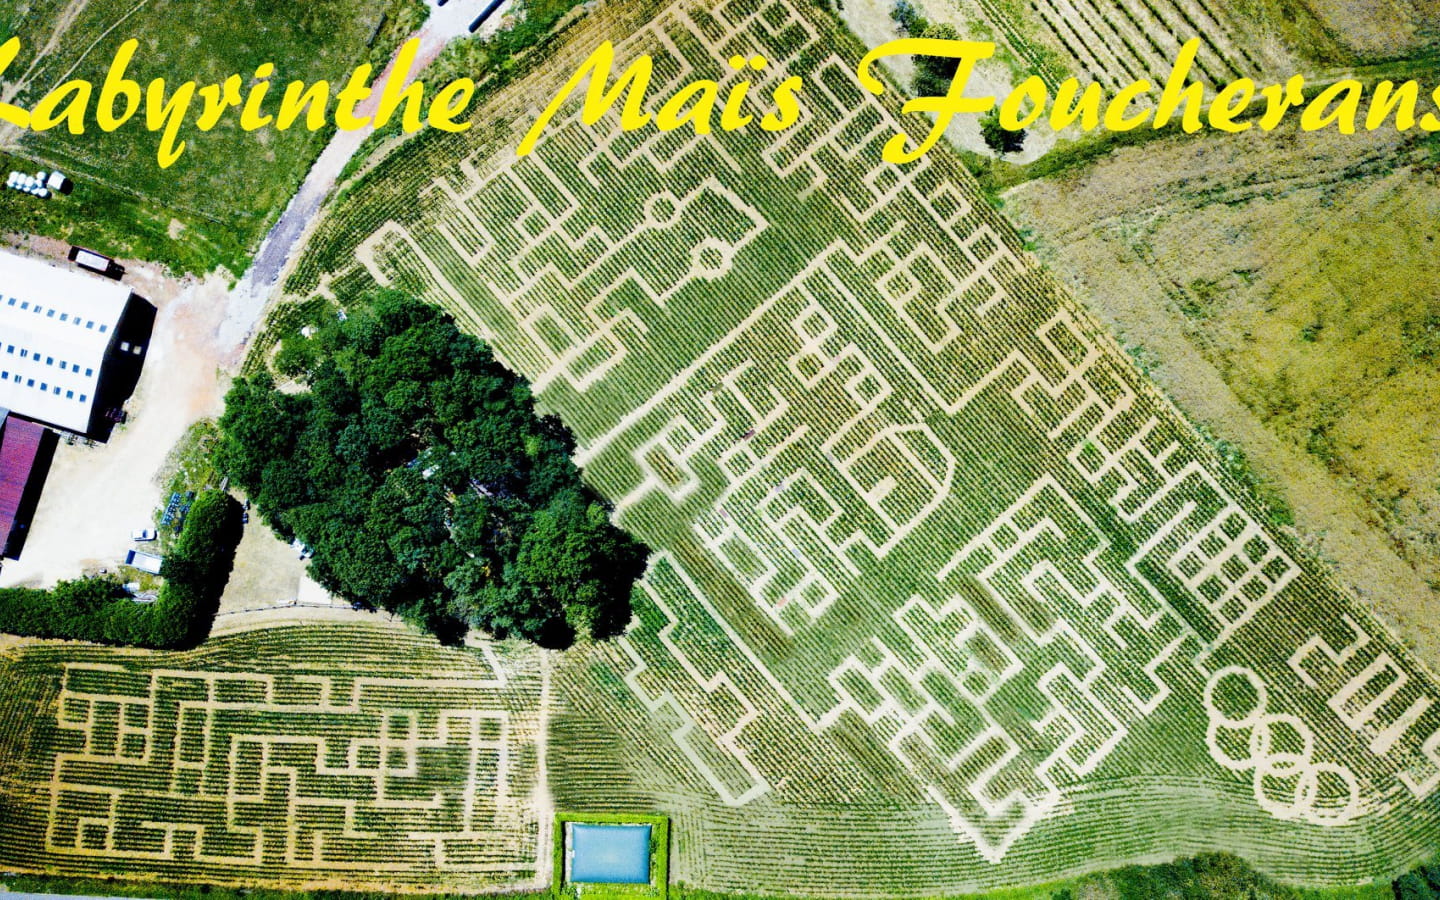 Labyrinthe de Maïs